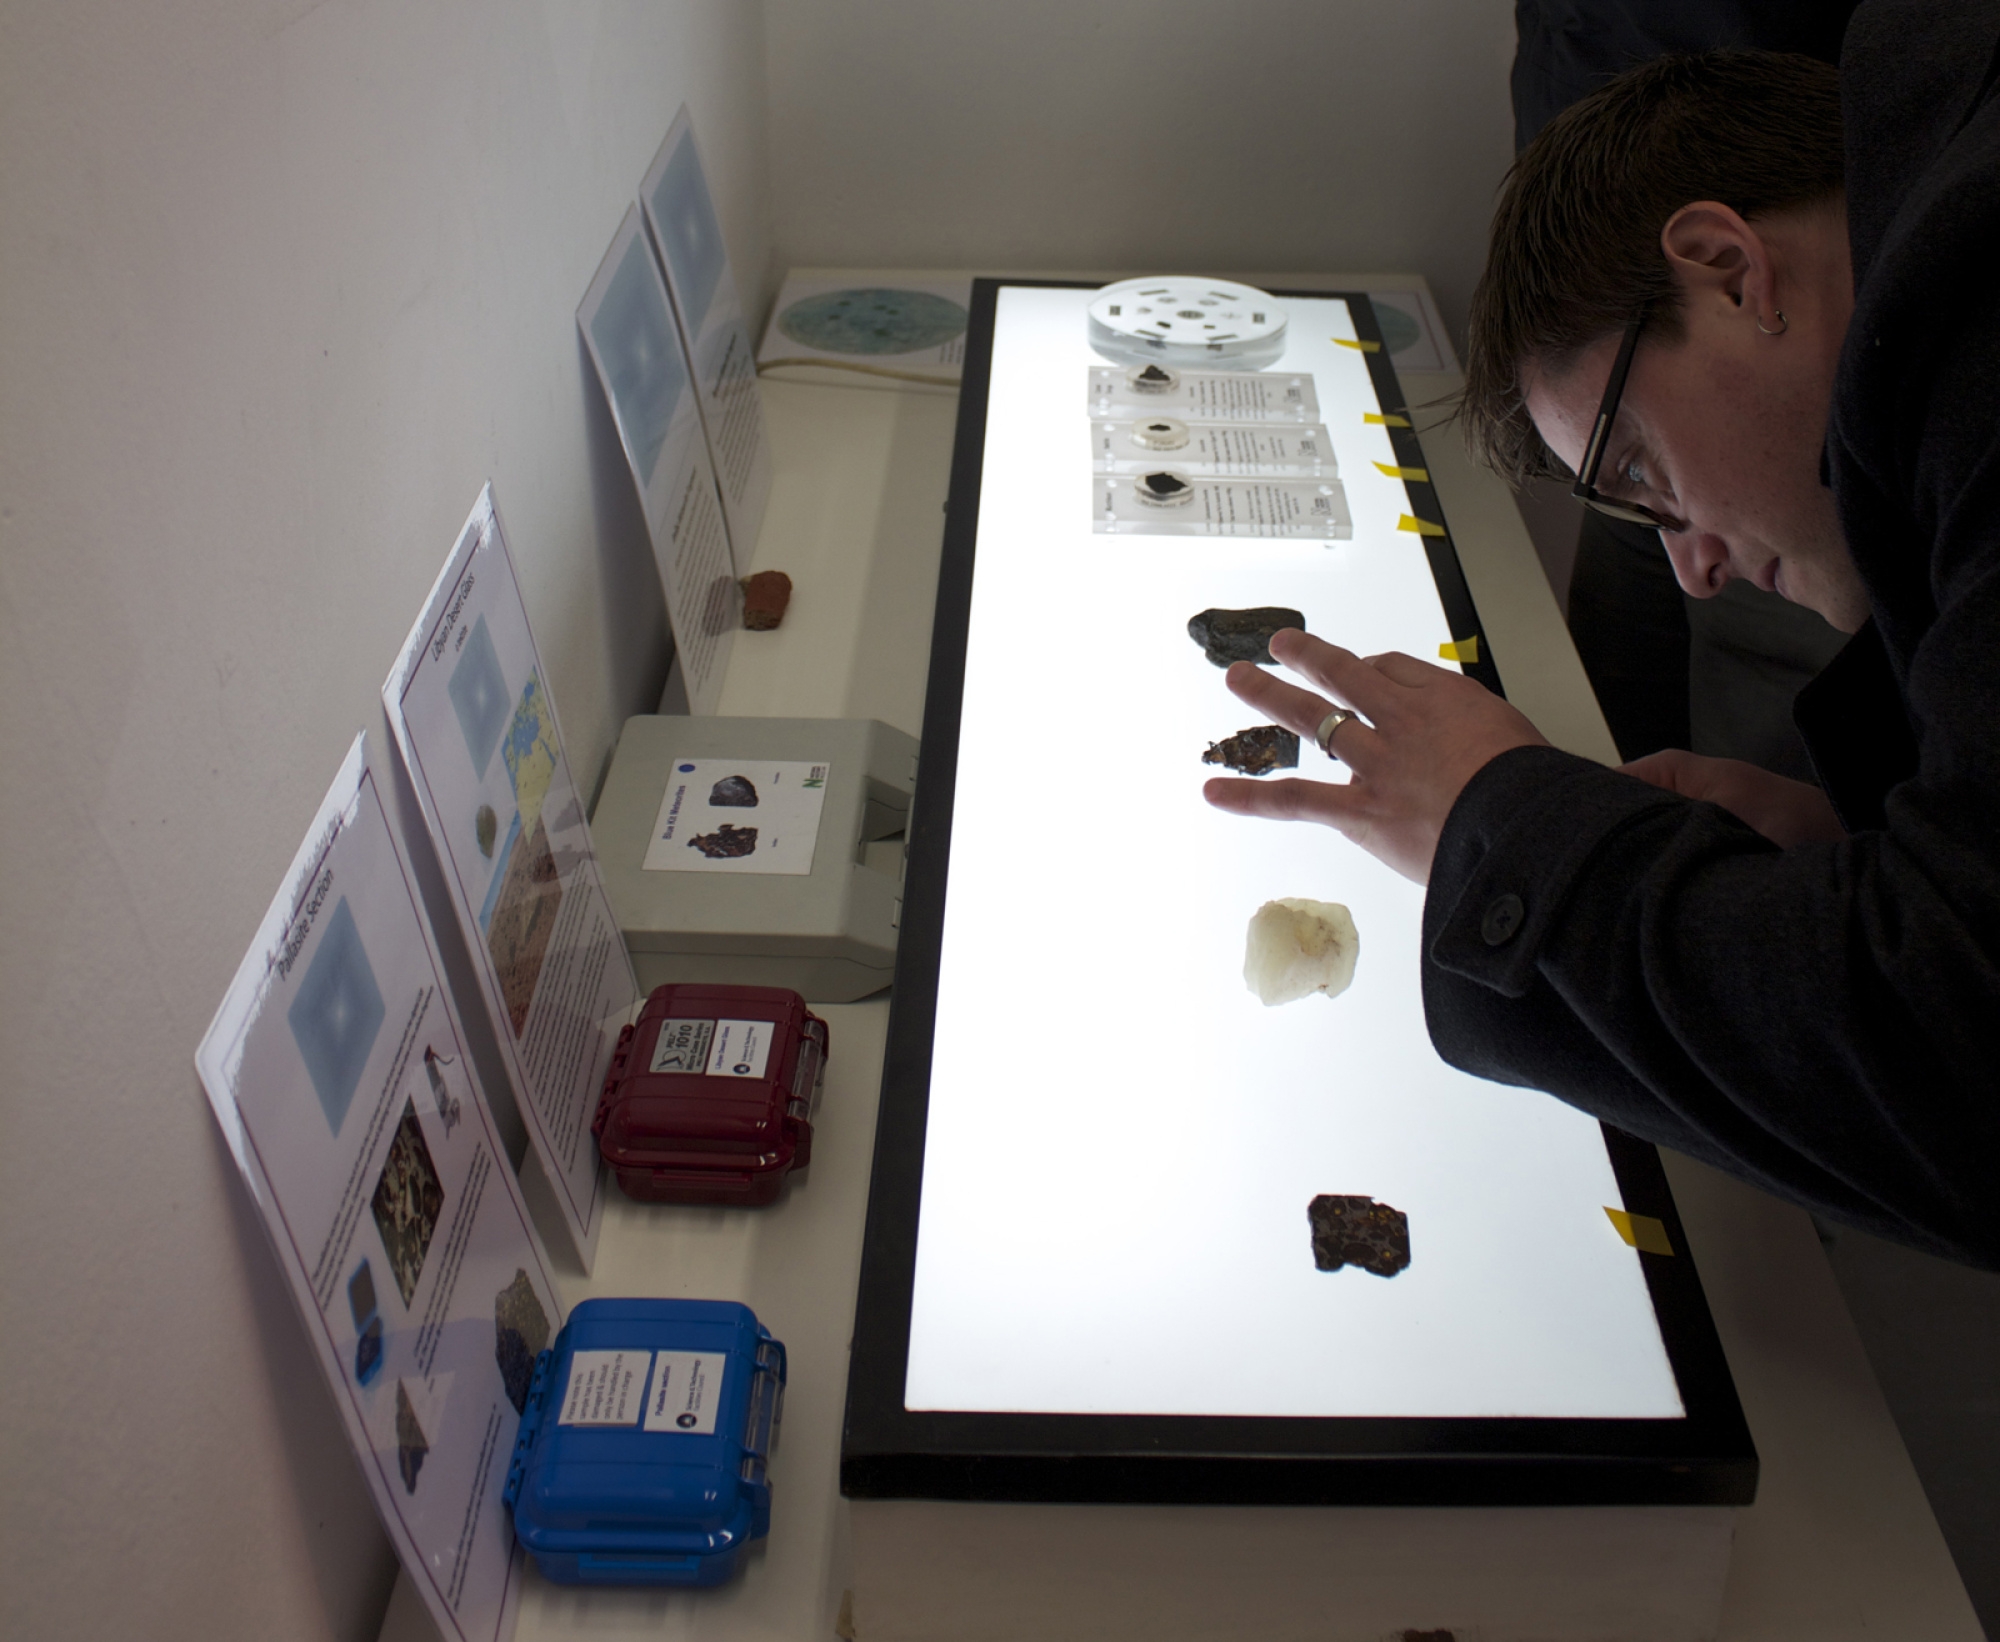 A researcher inspects some desert glass during the Lunar Salon